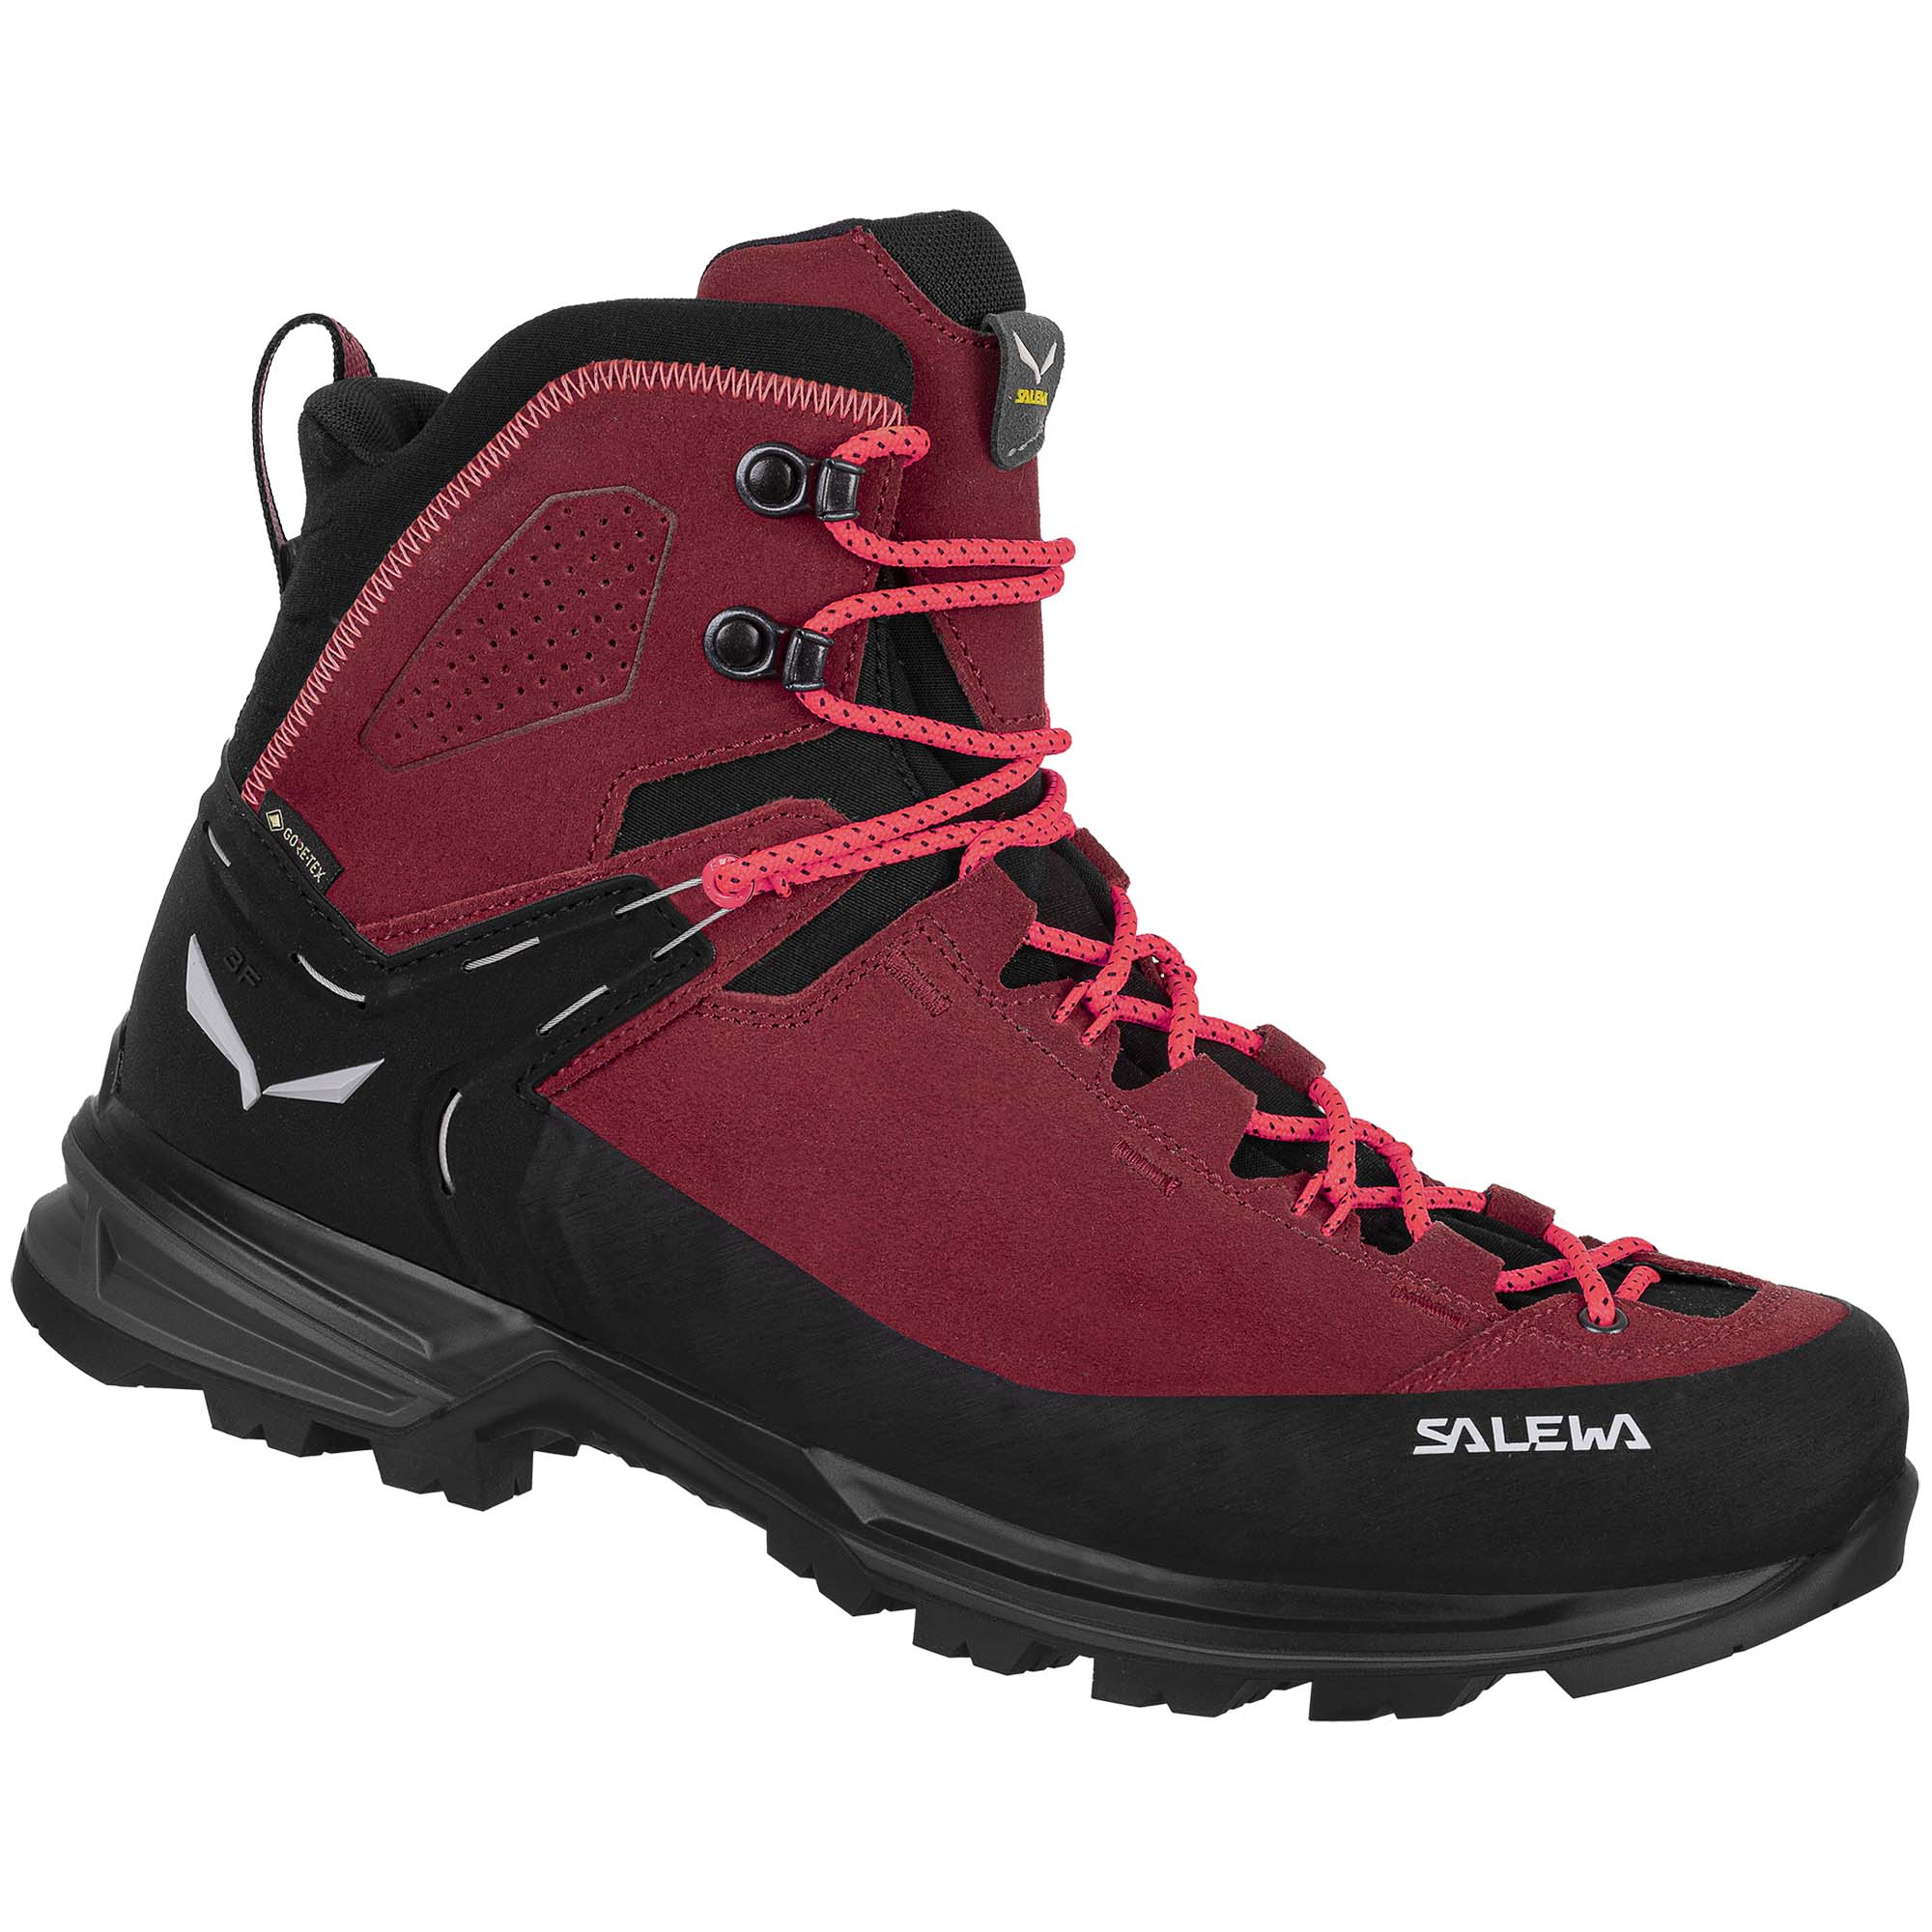 Salewa Mountain Trainer 2 Mid GTX Women's Hiking Boots